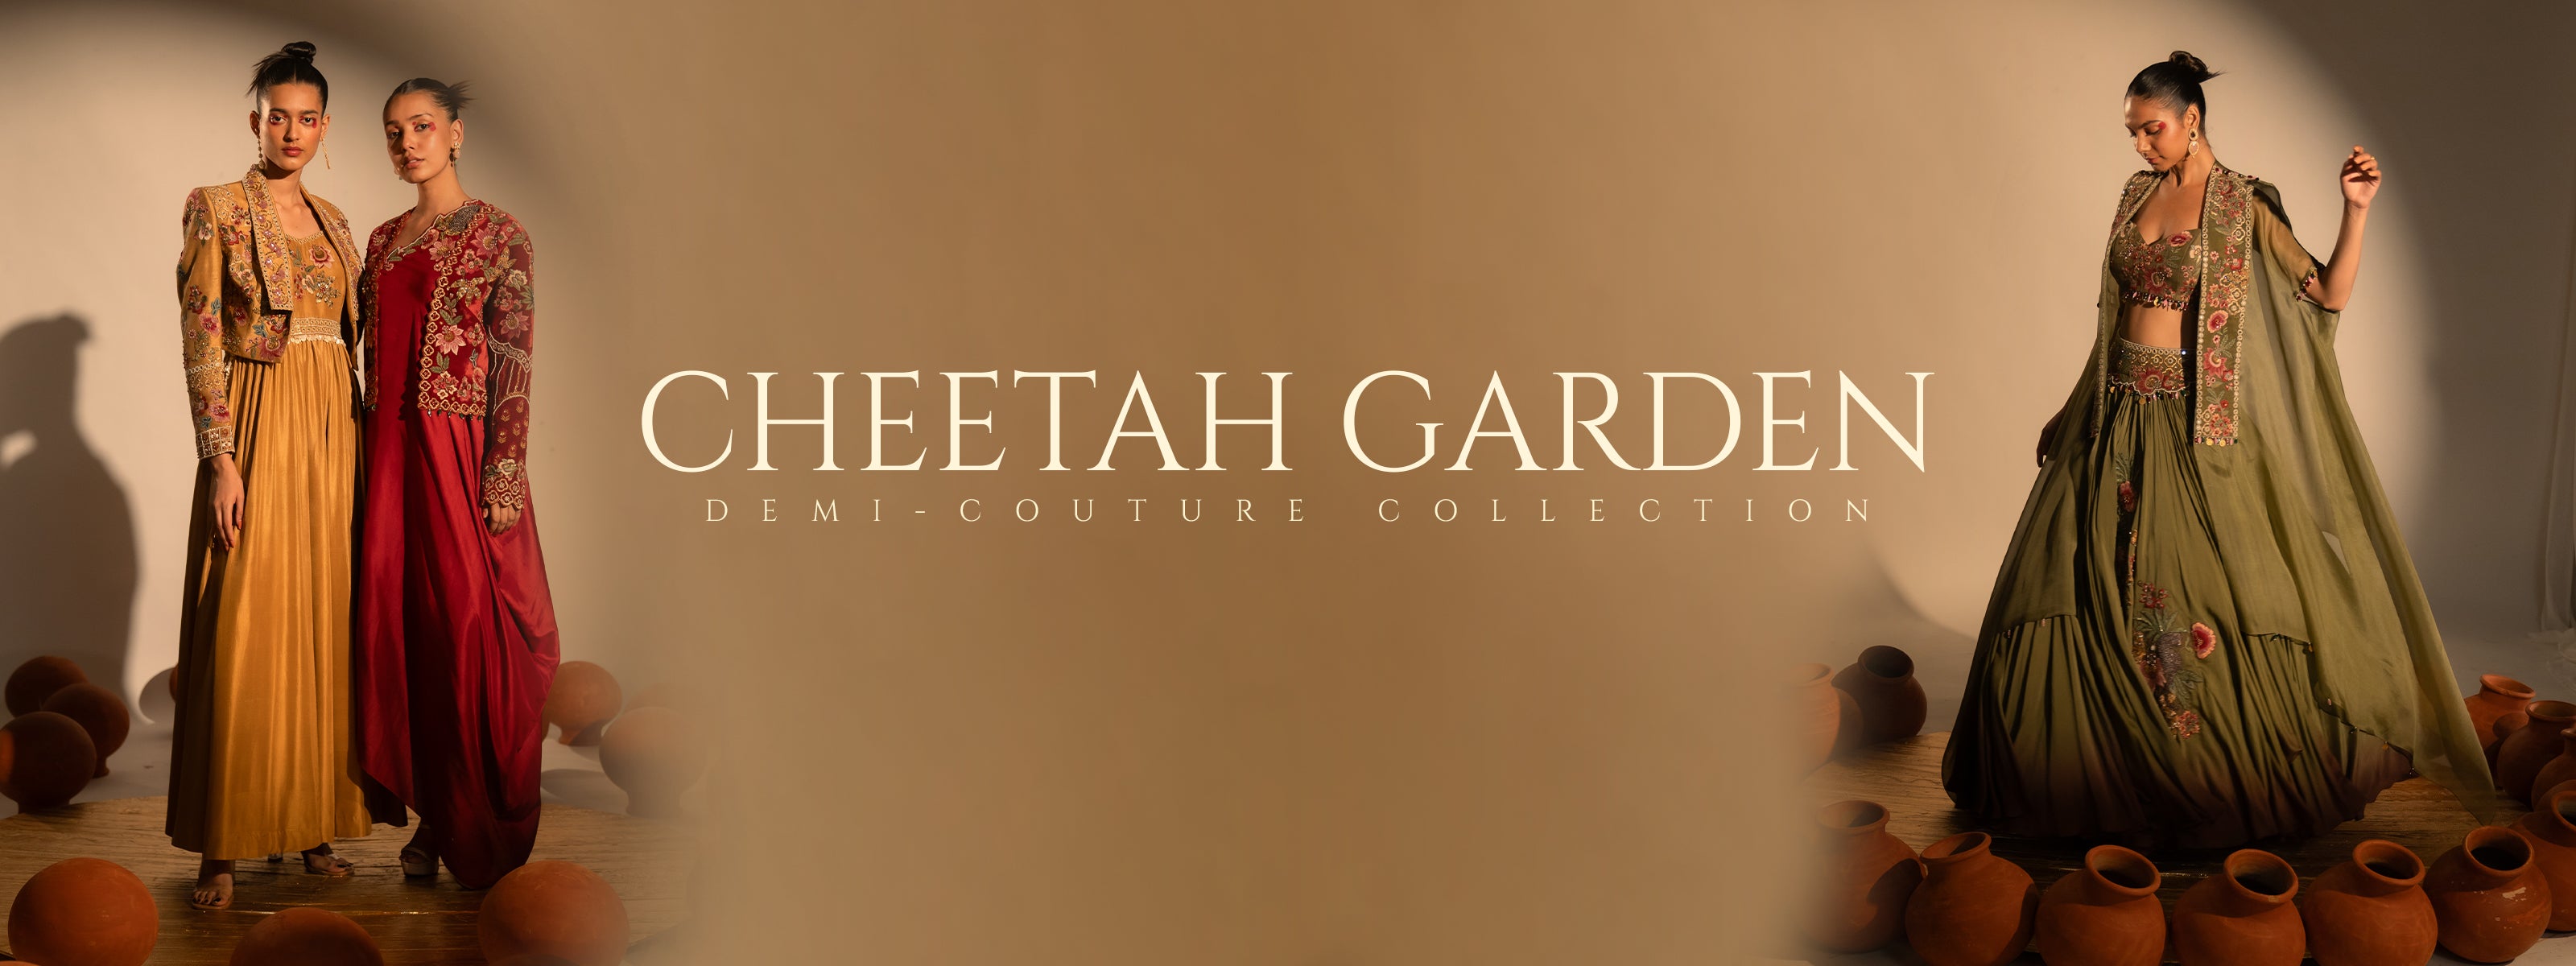 Cheetah Garden Web Banner